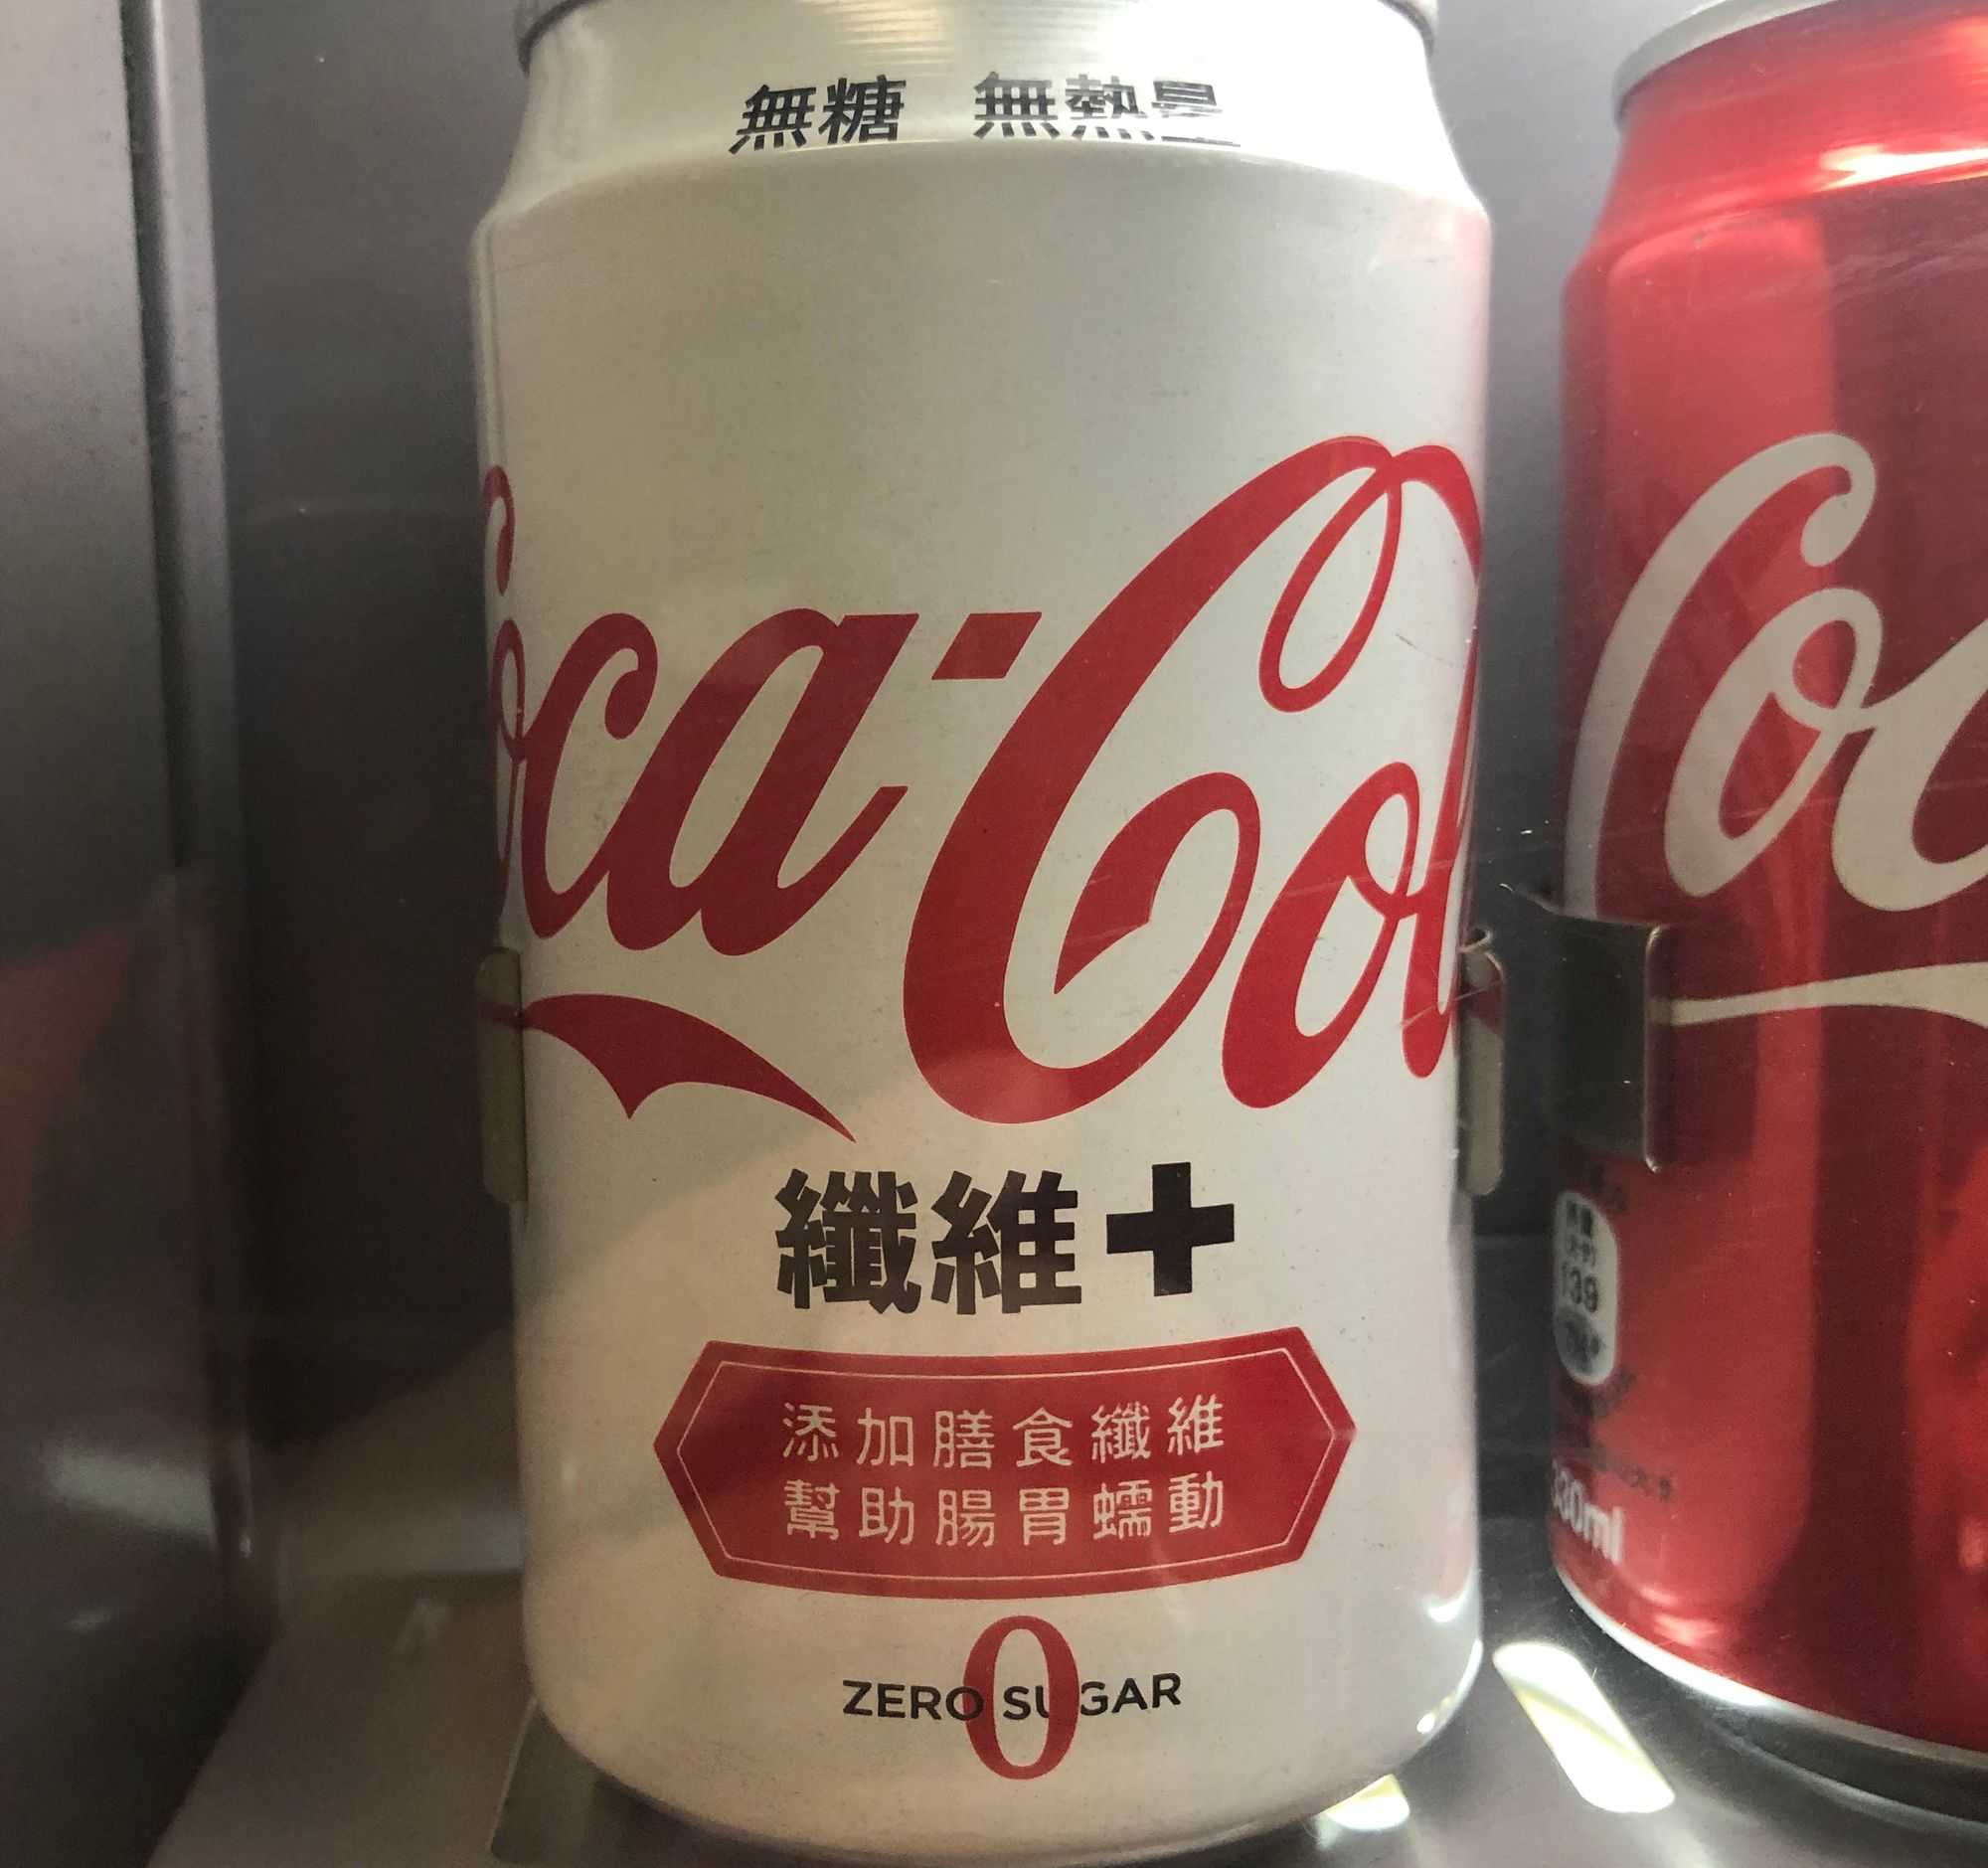 Coca-Cola with fiber